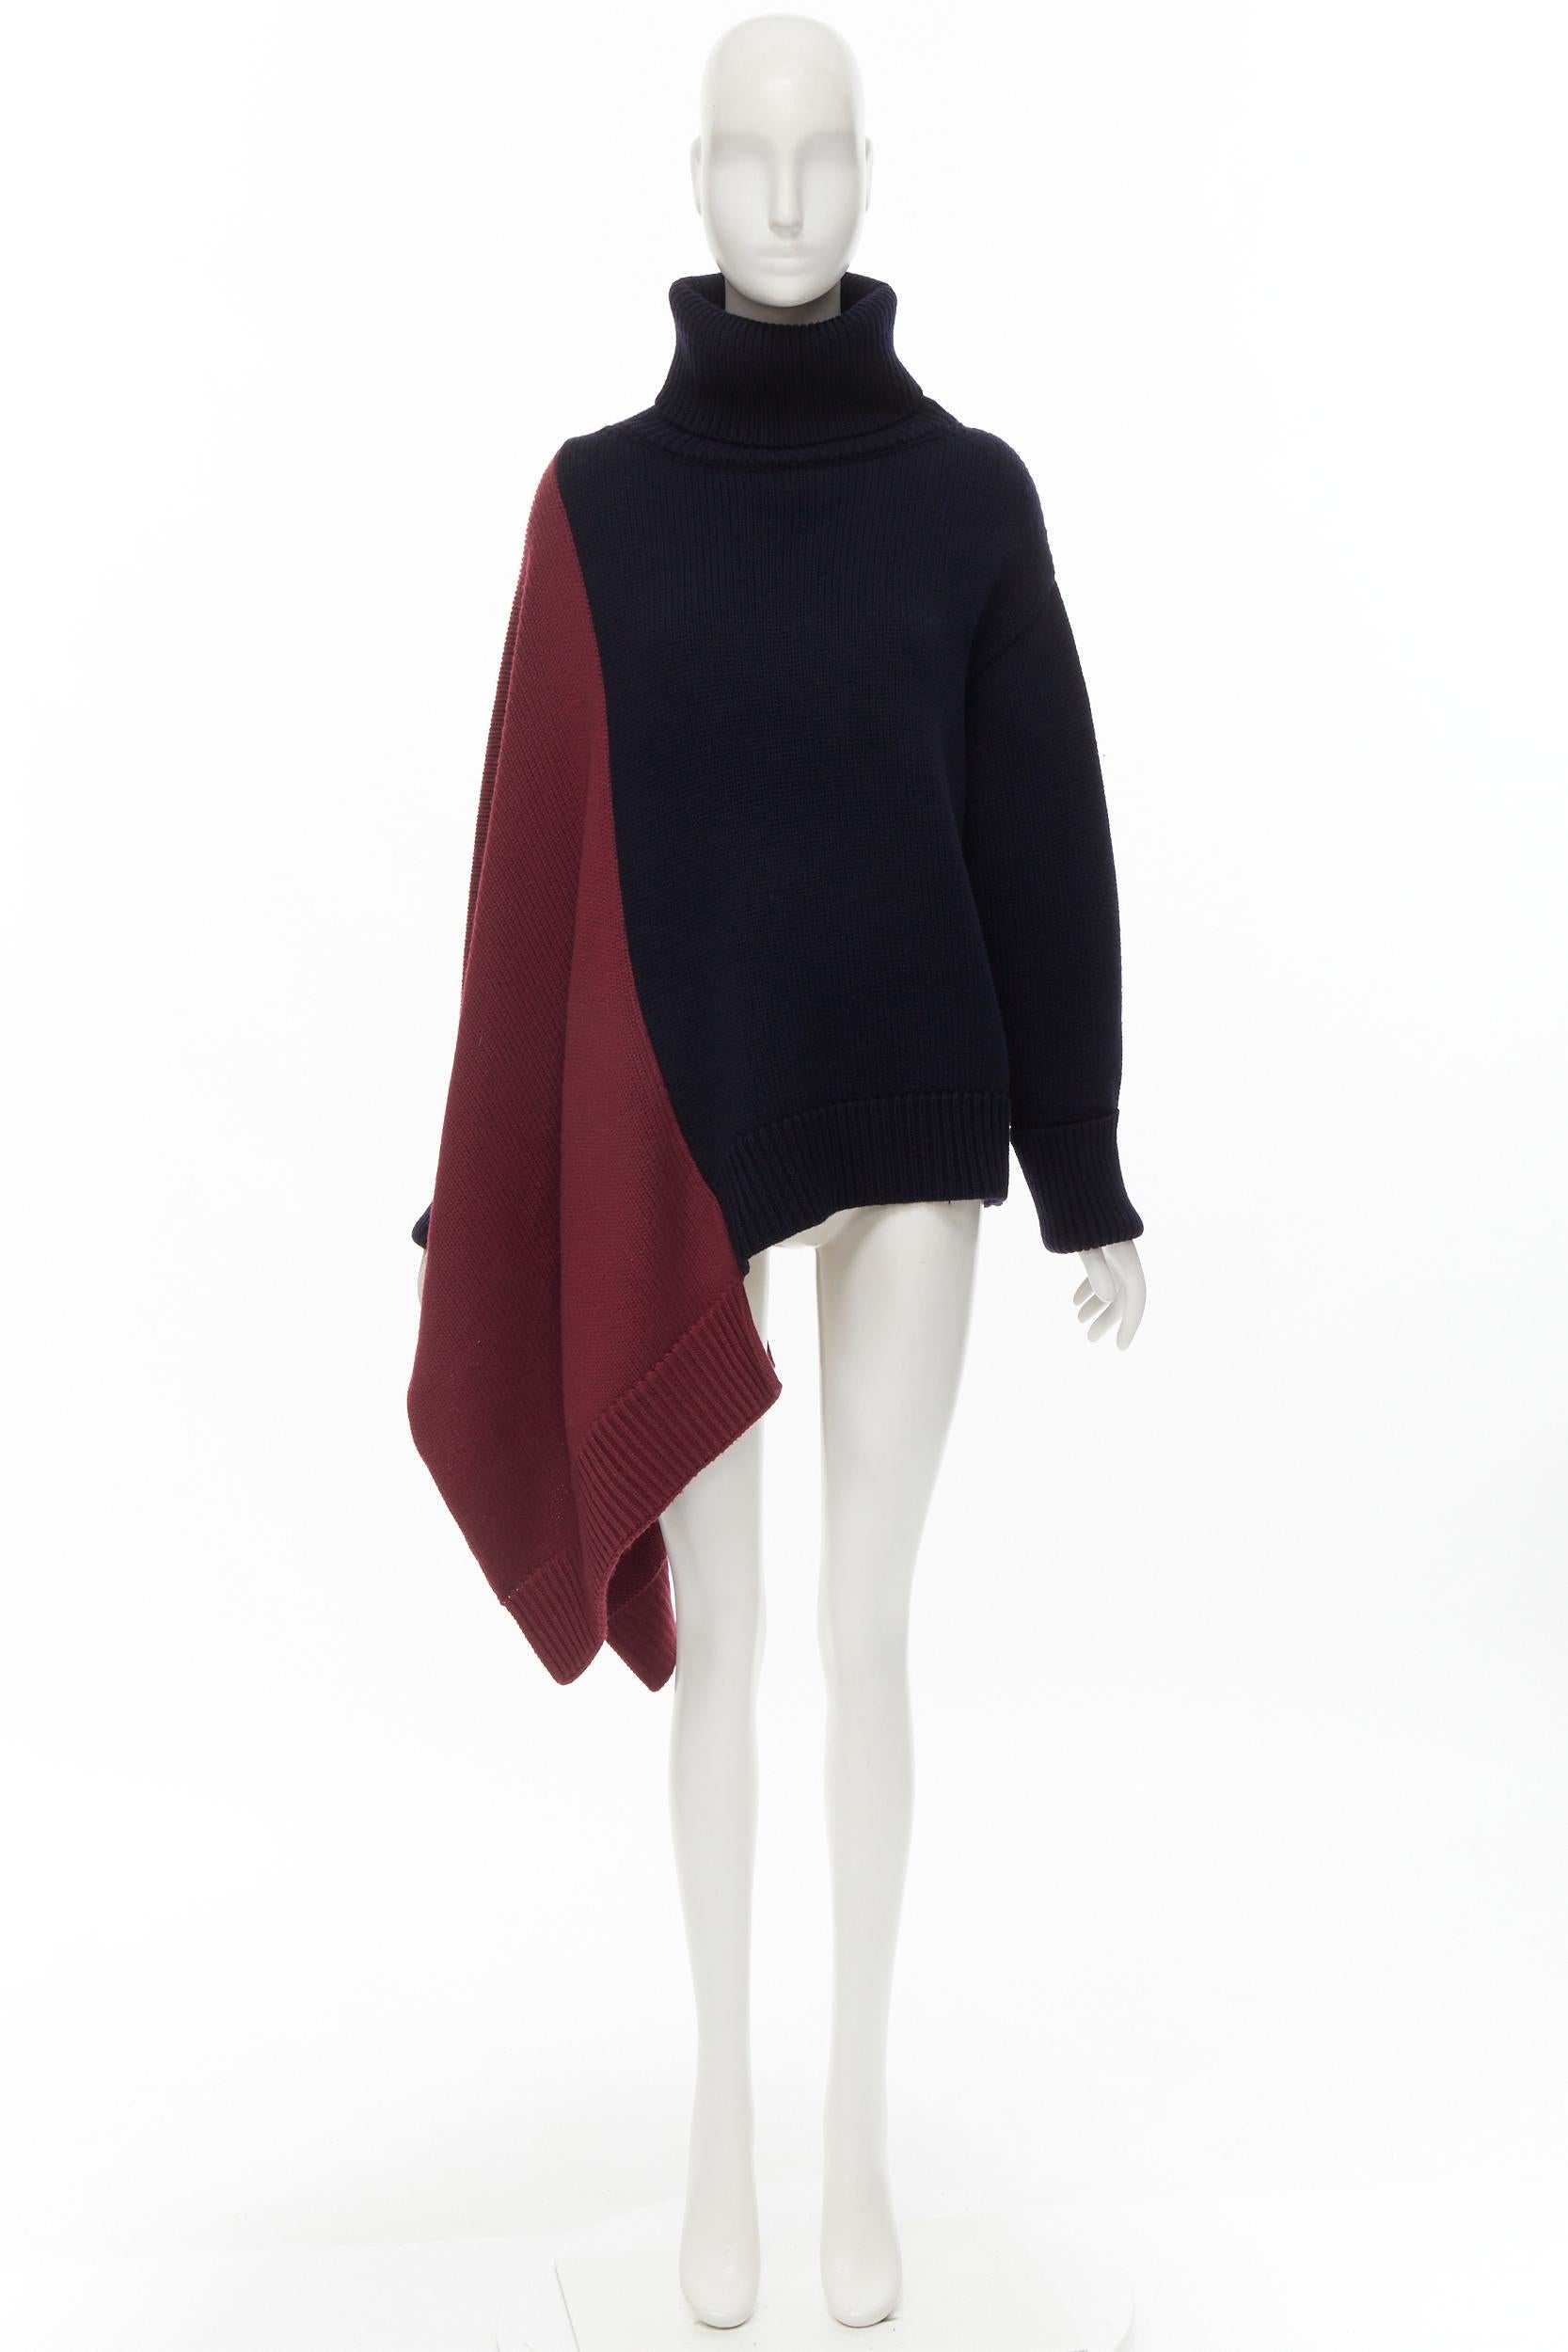 new MONSE 100% extra fine merino wool navy burgundy bias sweater cape pocho XS 5